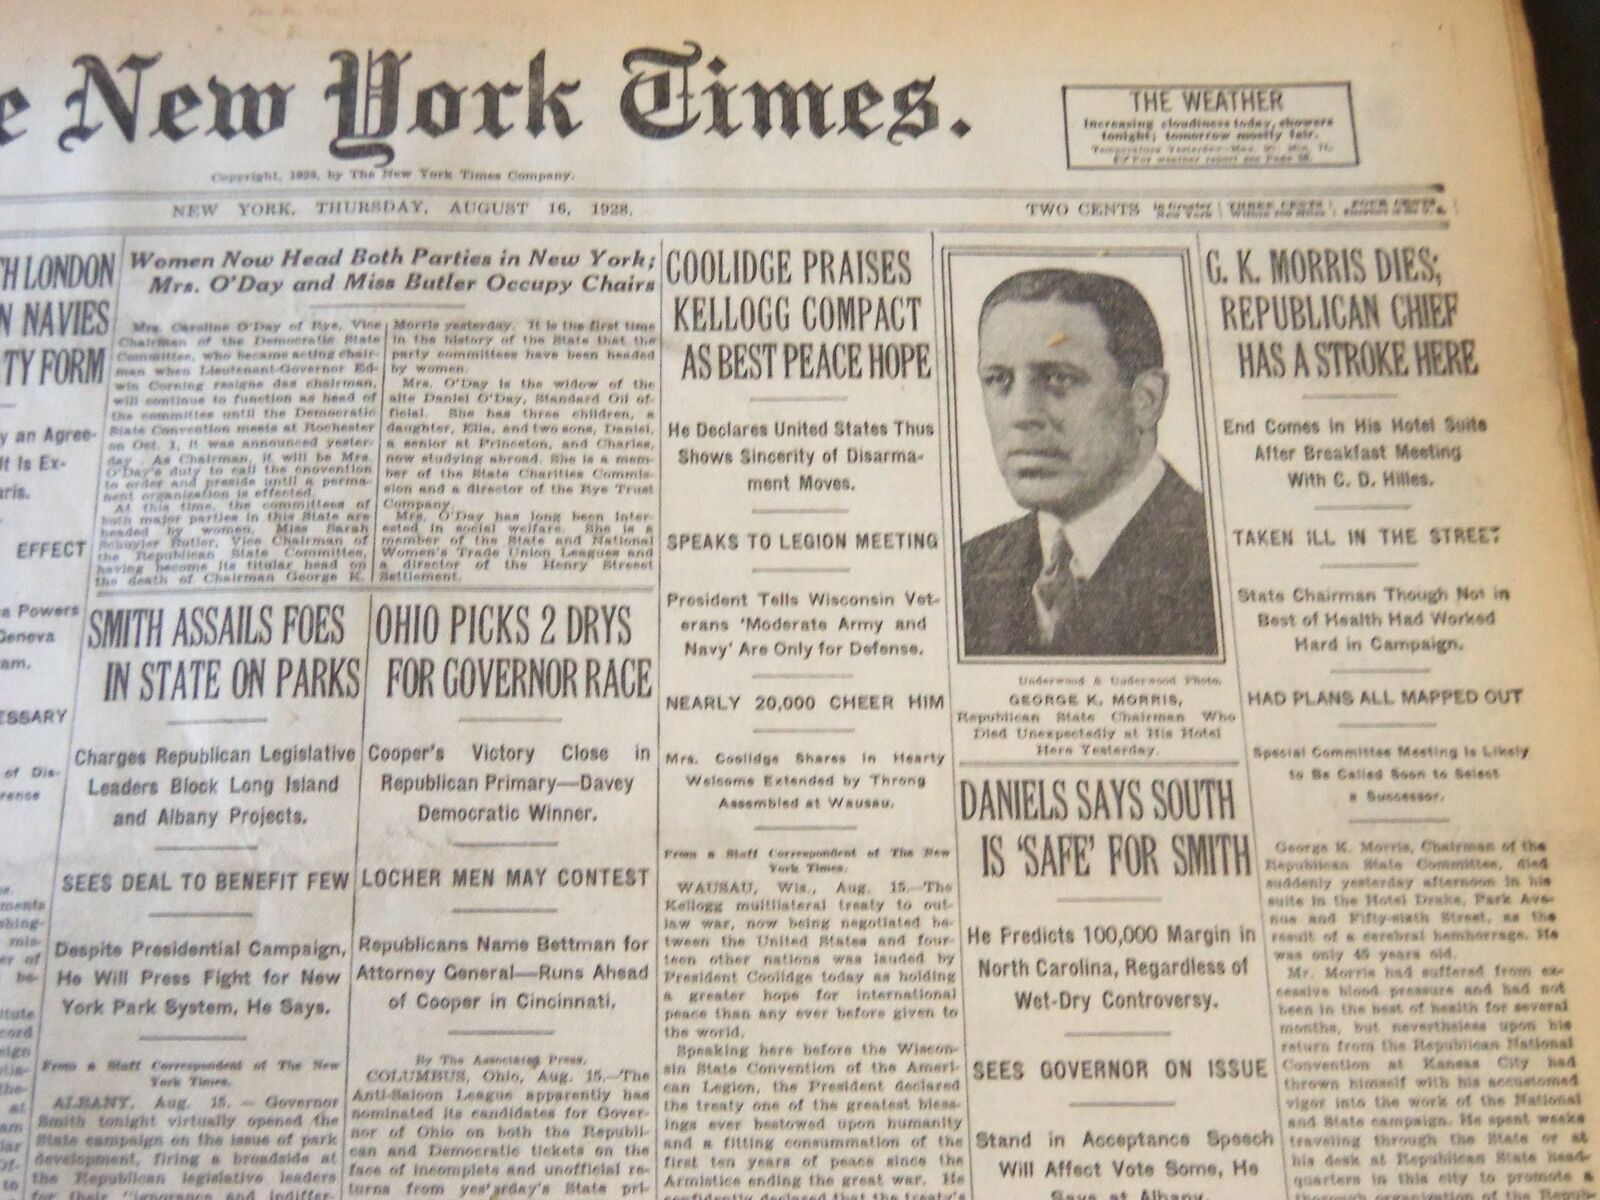 1928 AUGUST 16 NEW YORK TIMES - REPUBLICAN CHIEF G. K. MORRIS DIES - NT 6503